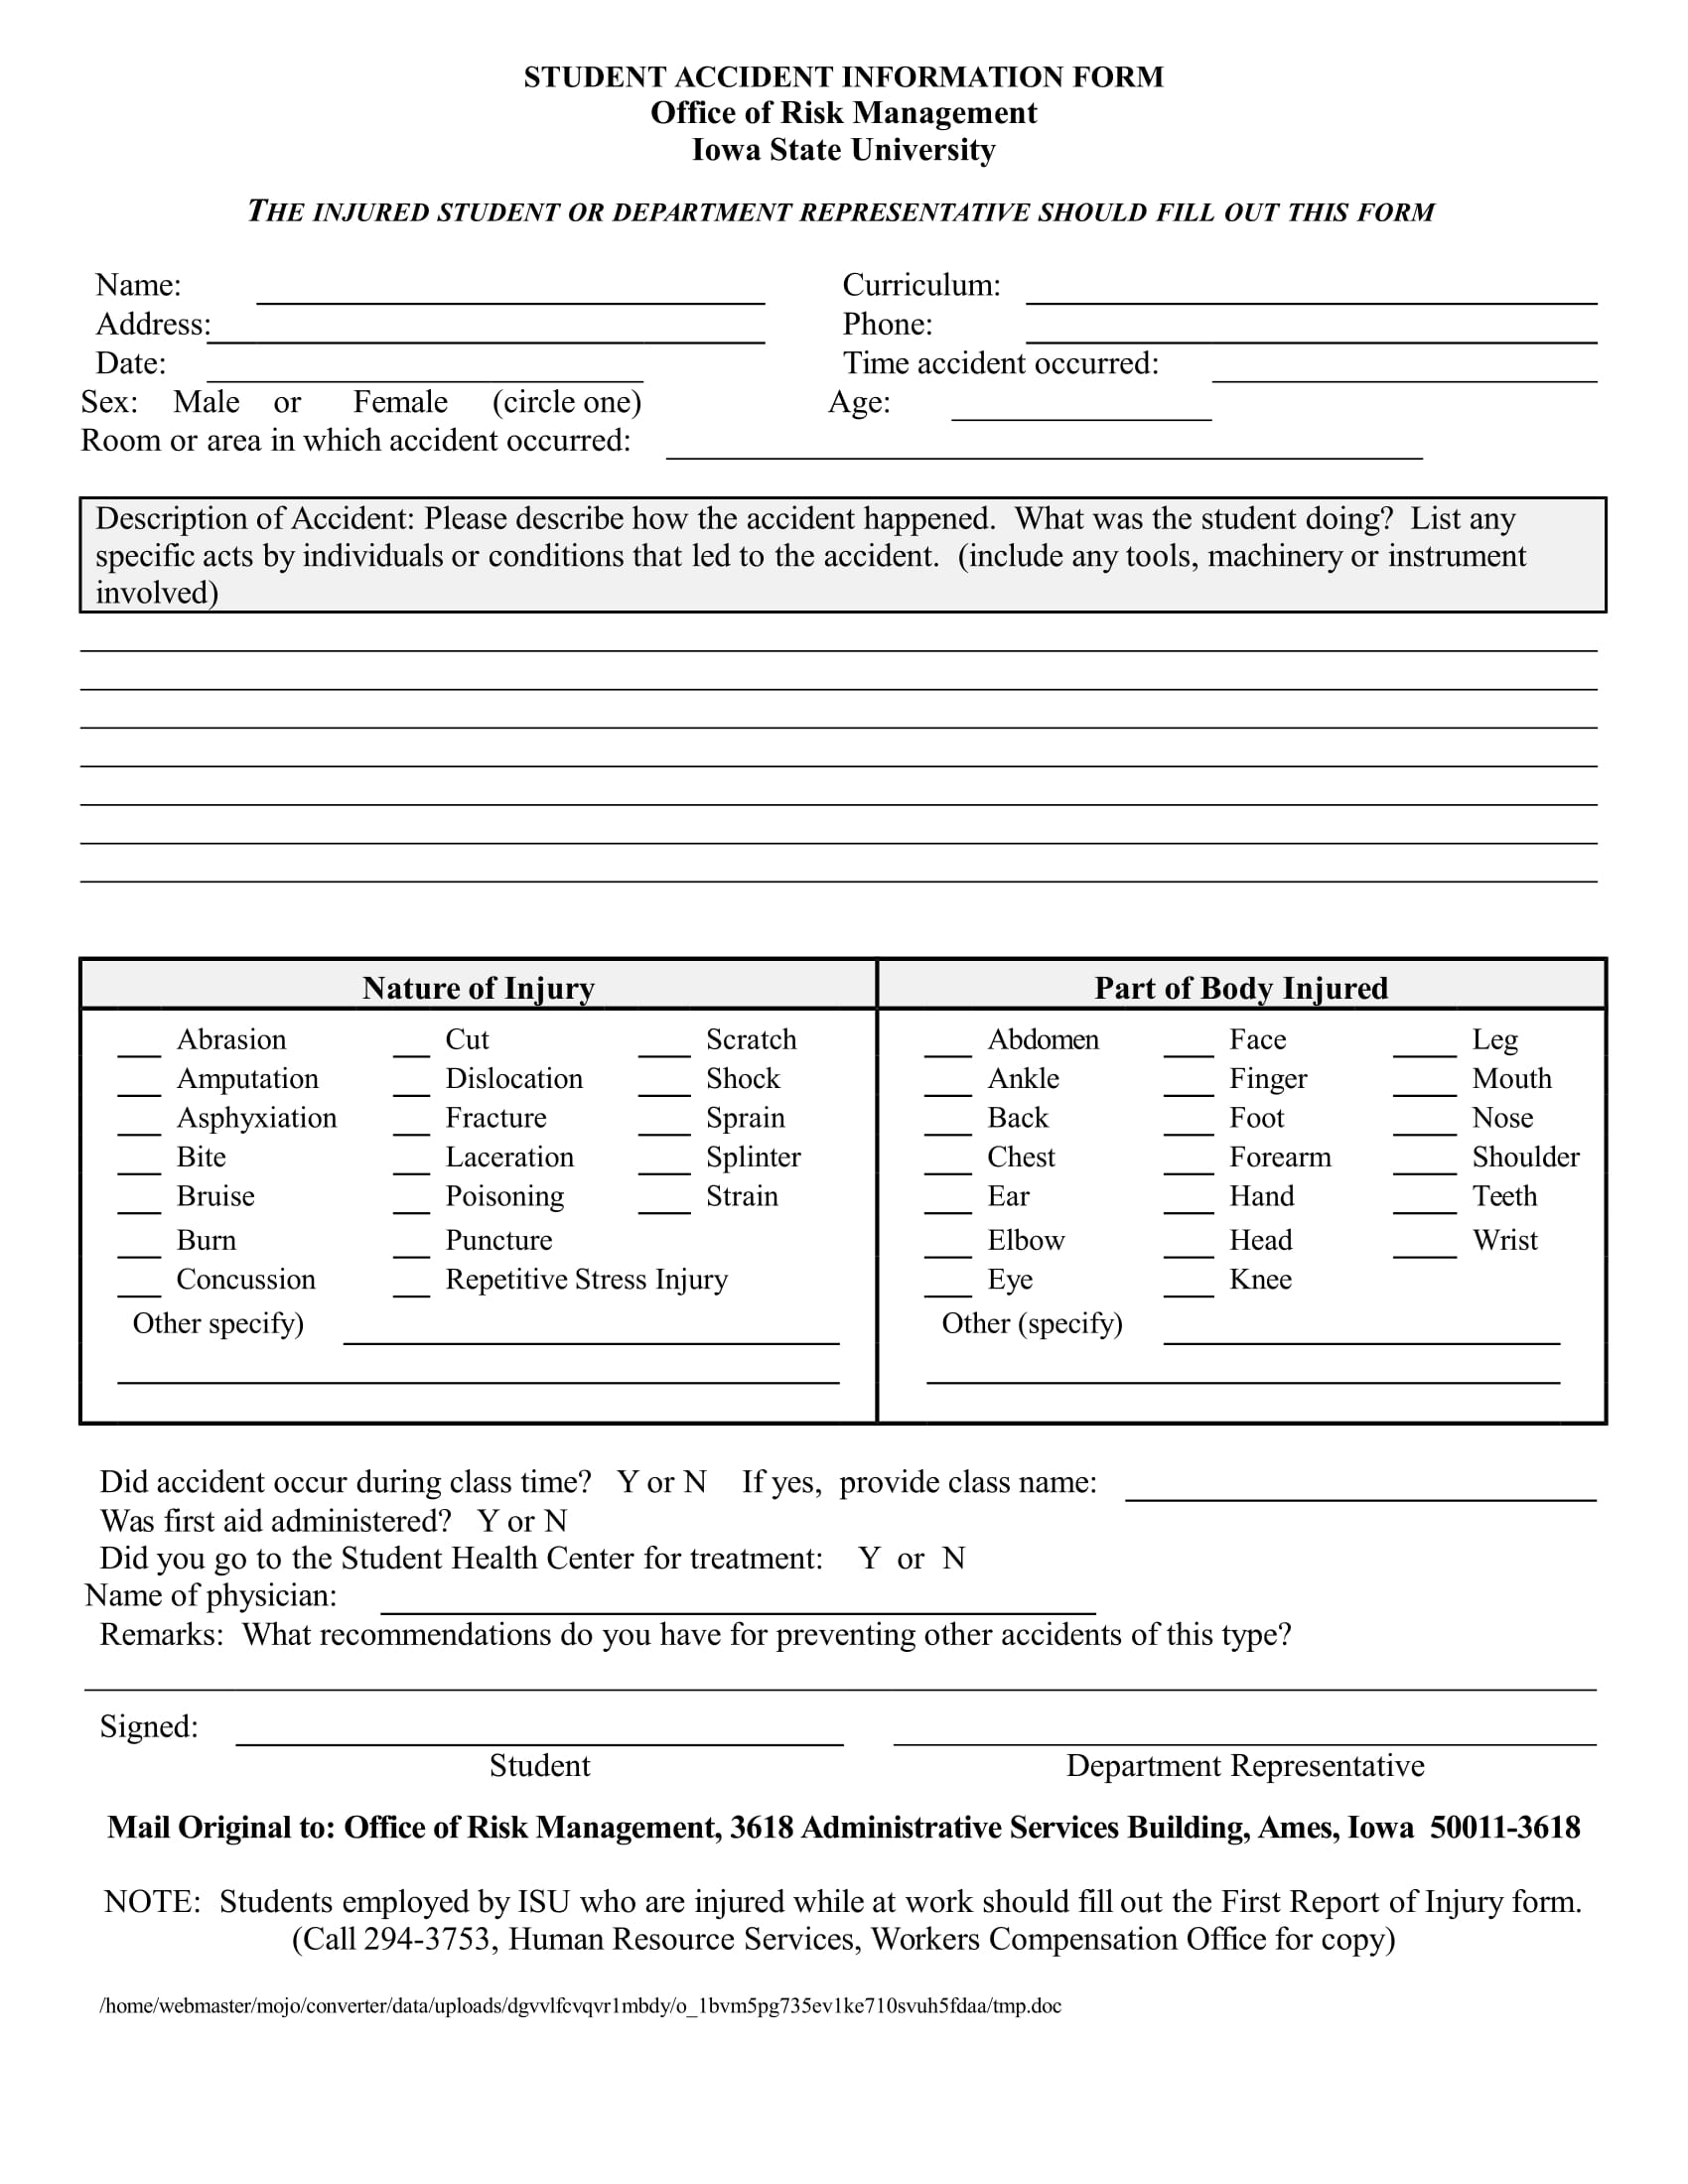 student accident information form sample 12